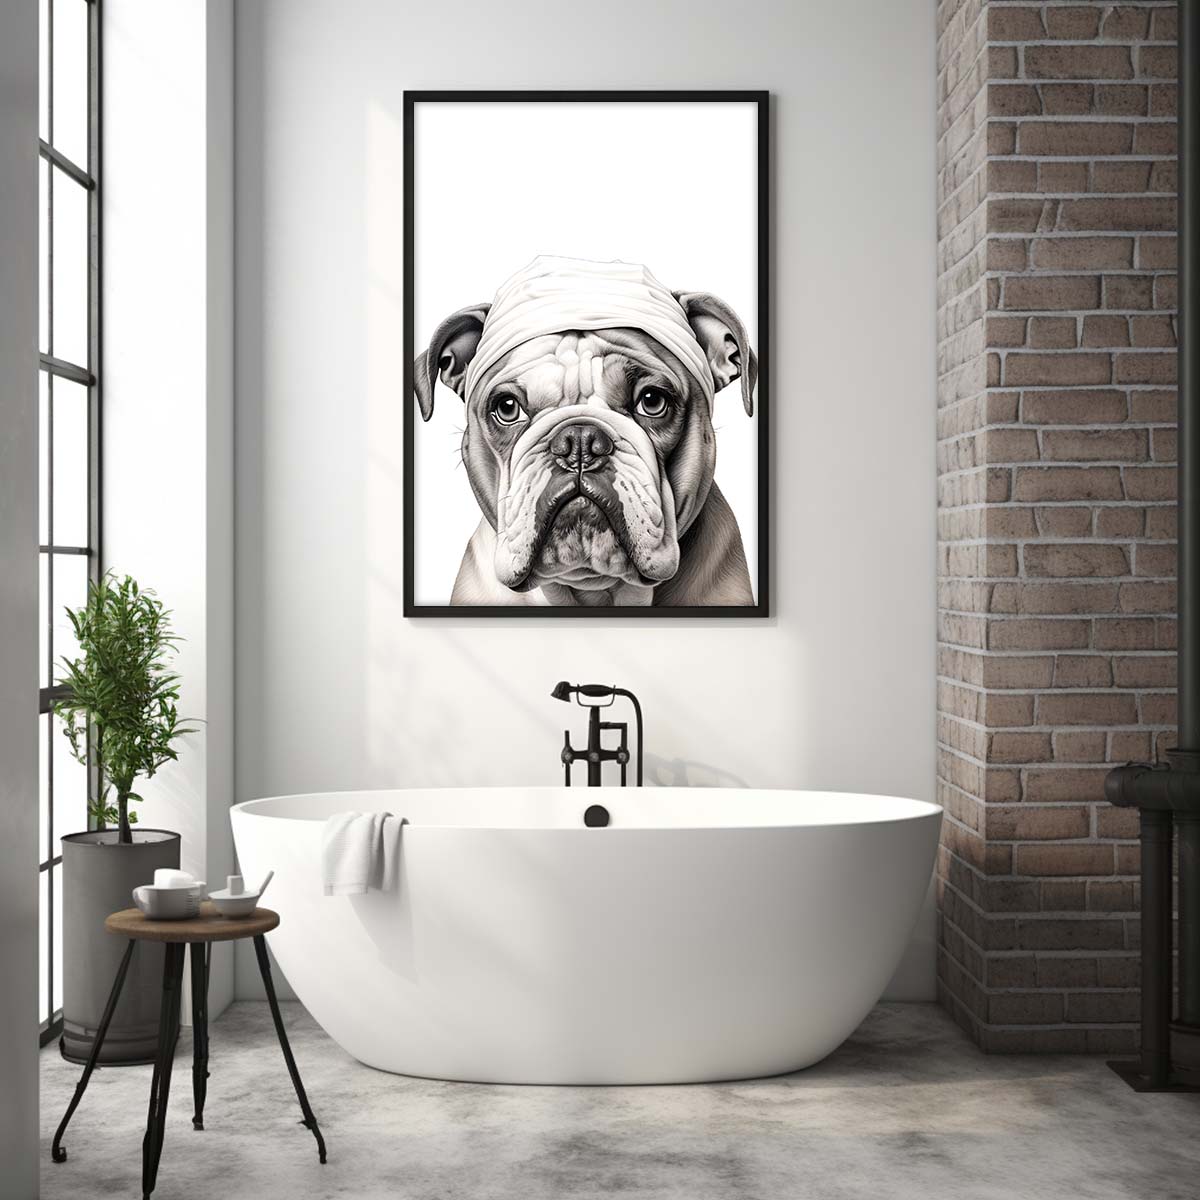 Bulldog With Toilet Paper Canvas Art, Bulldog With Toilet Paper, Funny Dog Art, Bathroom Wall Decor, Home Decor, Bathroom Wall Art, Dog Wall Decor, Animal Decor, Pet Gift